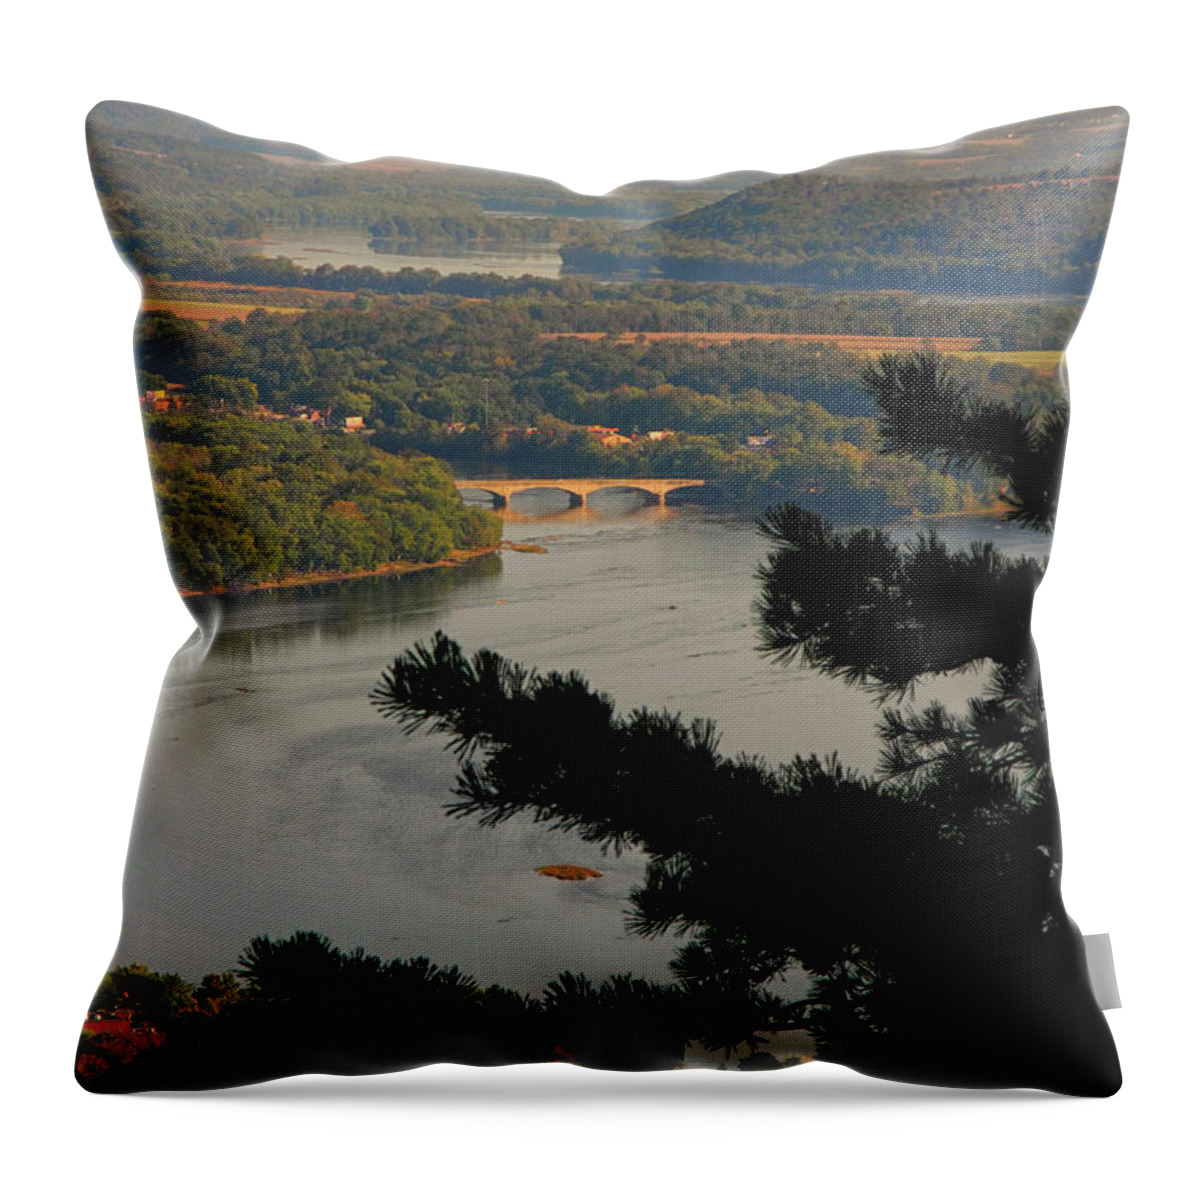 Susquehanna River Below Throw Pillow featuring the photograph Susquehanna River Below by Raymond Salani III